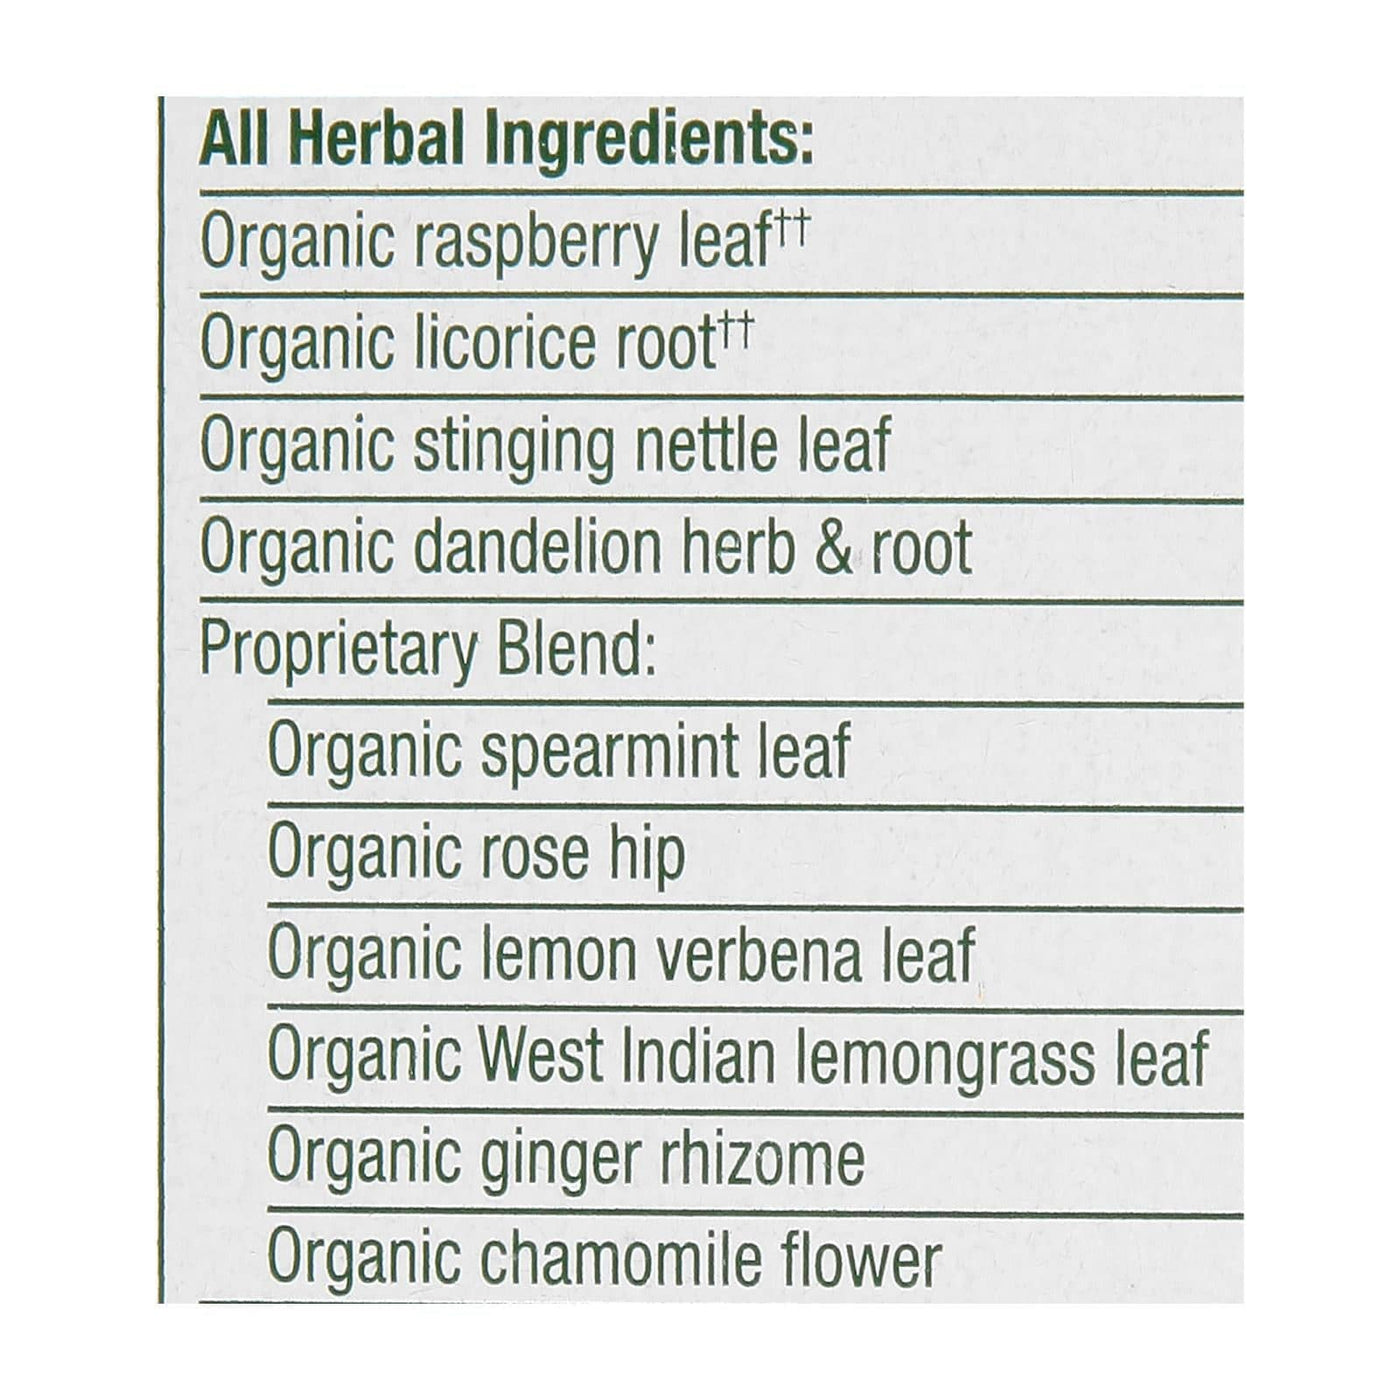 Buy Traditional Medicinals Female Toner Herbal Tea - 16 Tea Bags - Case Of 6  at OnlyNaturals.us